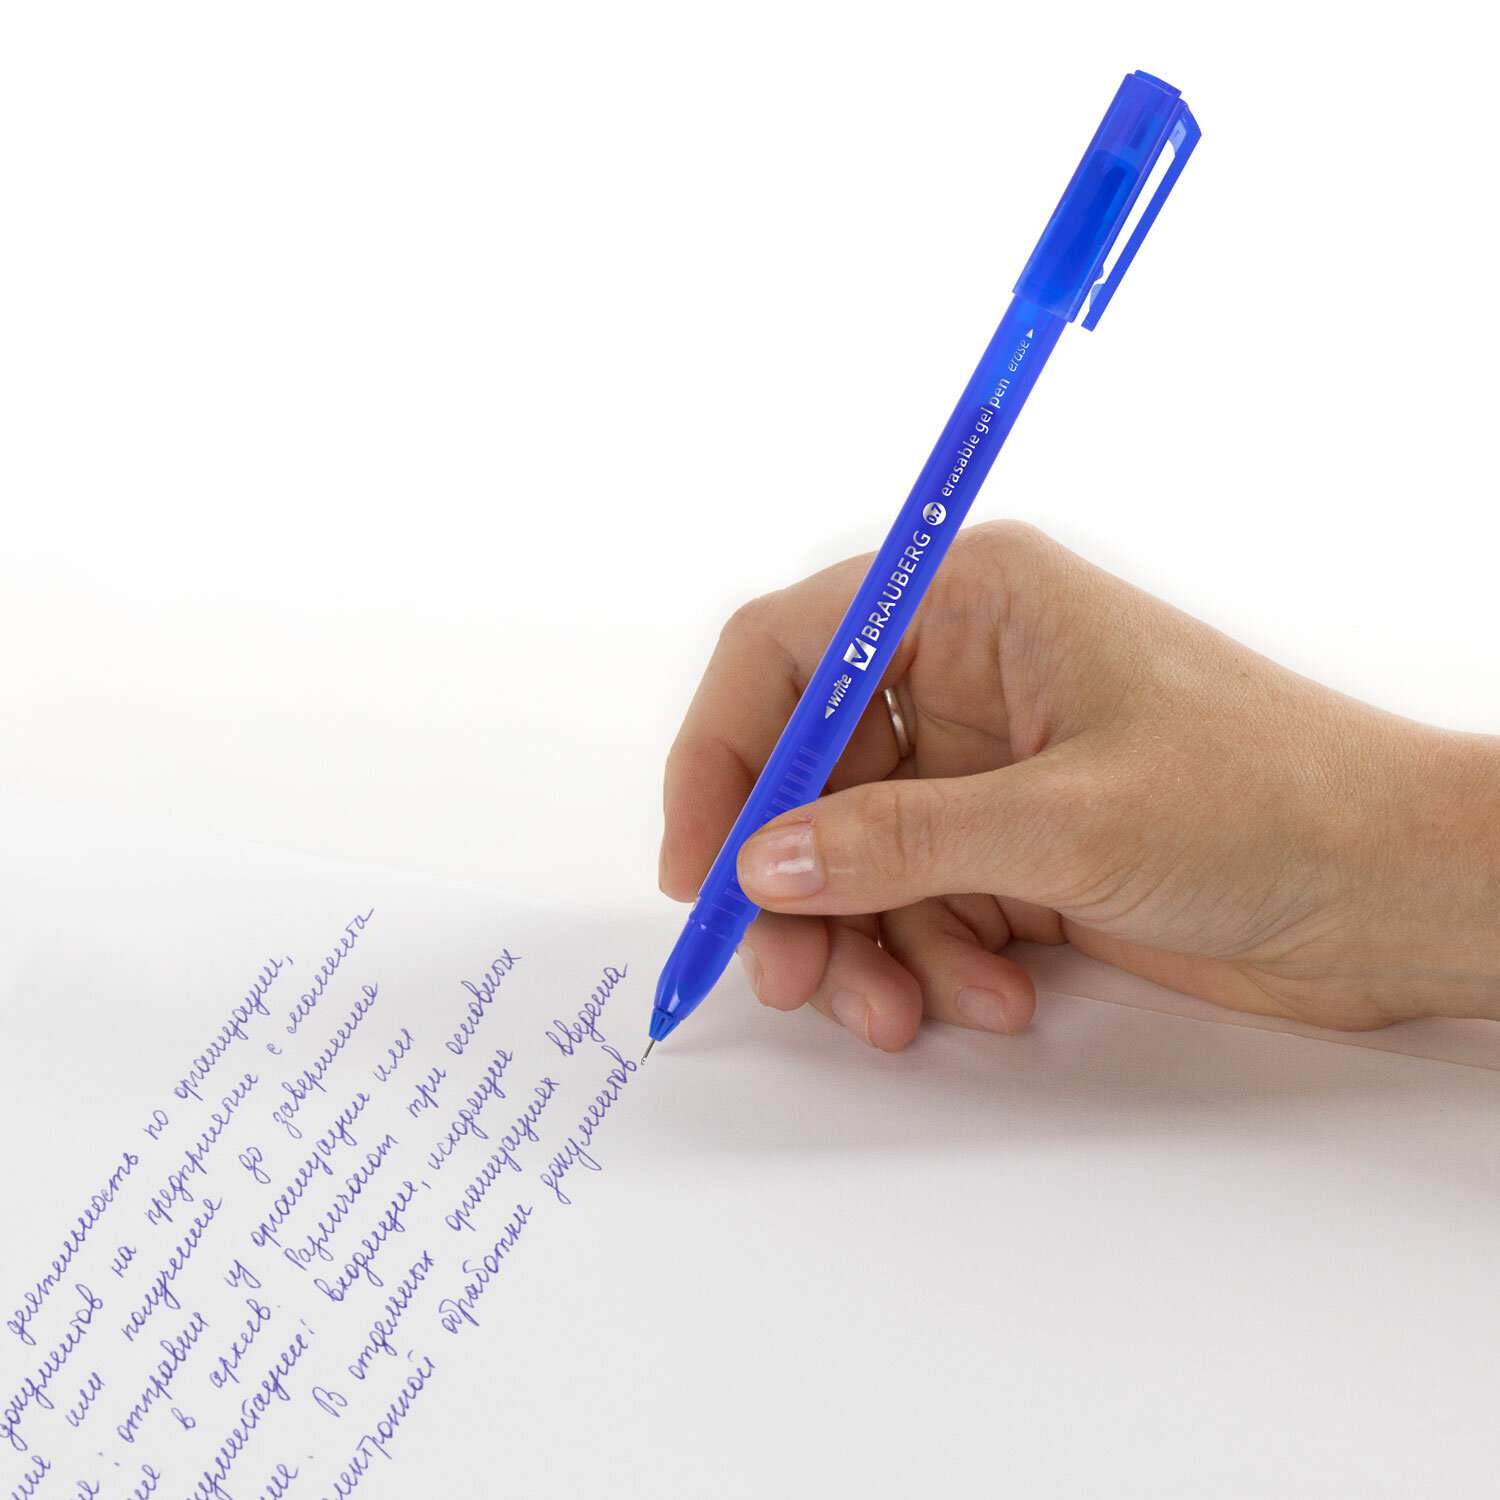 Ручки гелевые Brauberg пиши стирай набор 4 штуки синие - фото 10